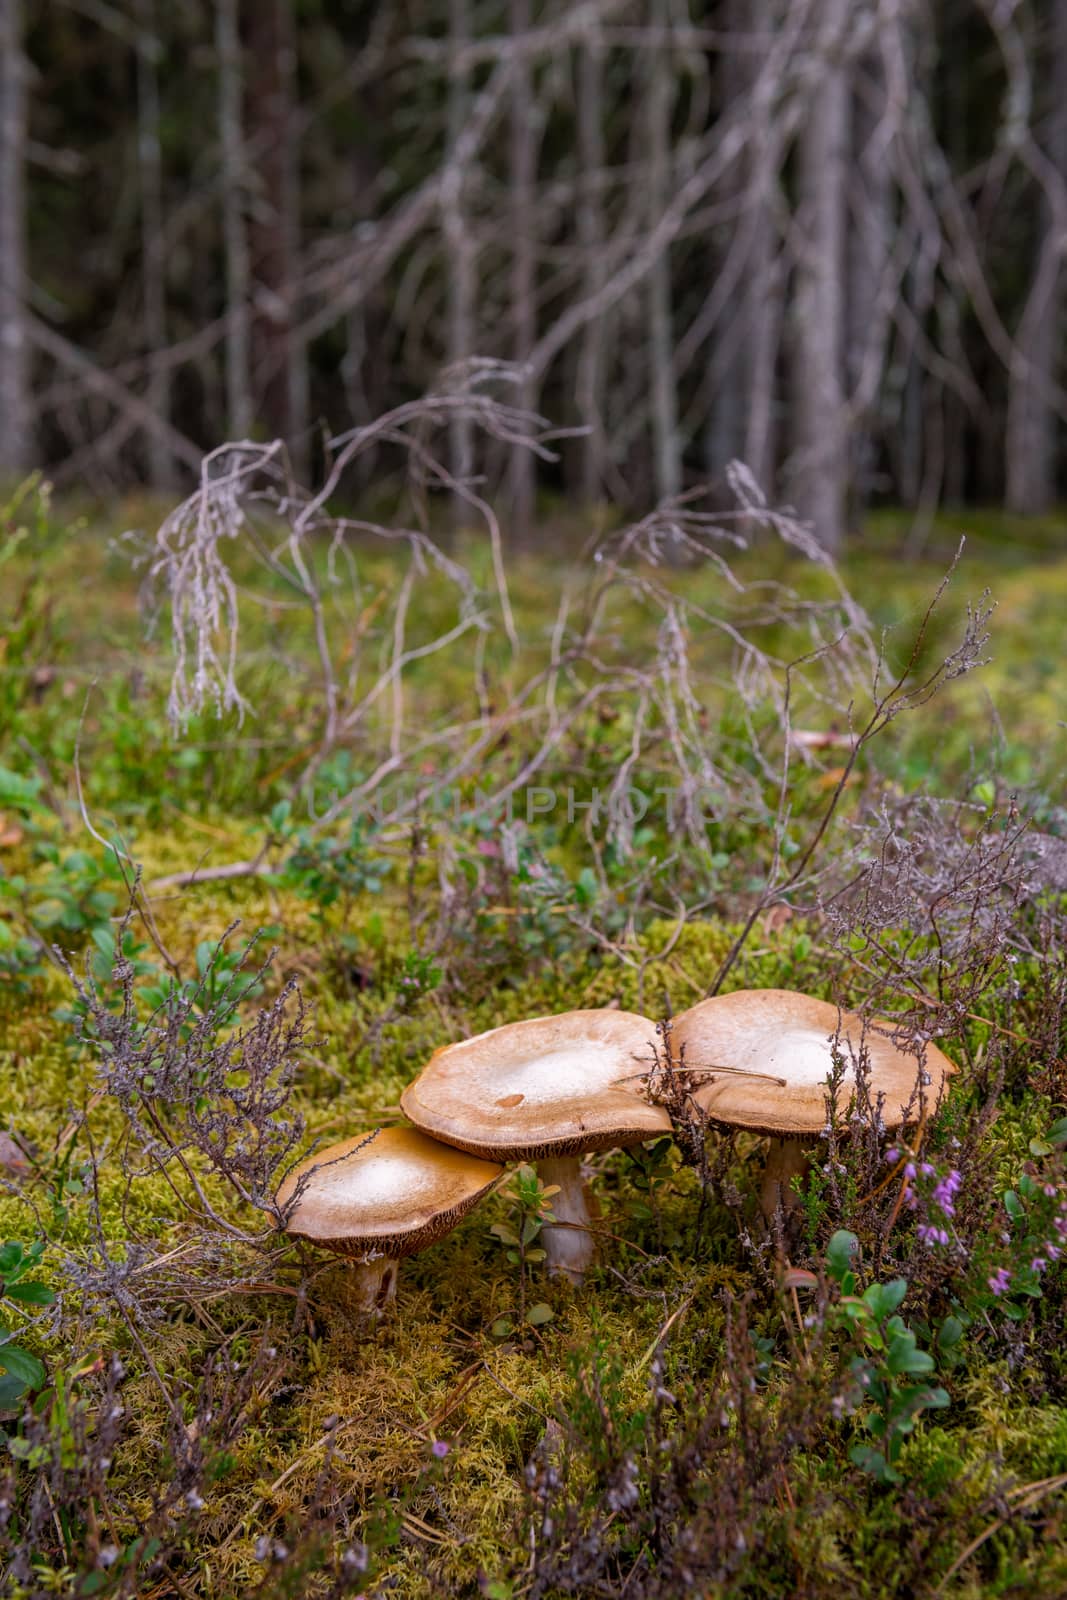 Mushrooms in wood. Mossy coniferous forest in Latvia. Mushrooms growing in wood.  Closeup of three mushrooms. Healty and vegetarian food.

